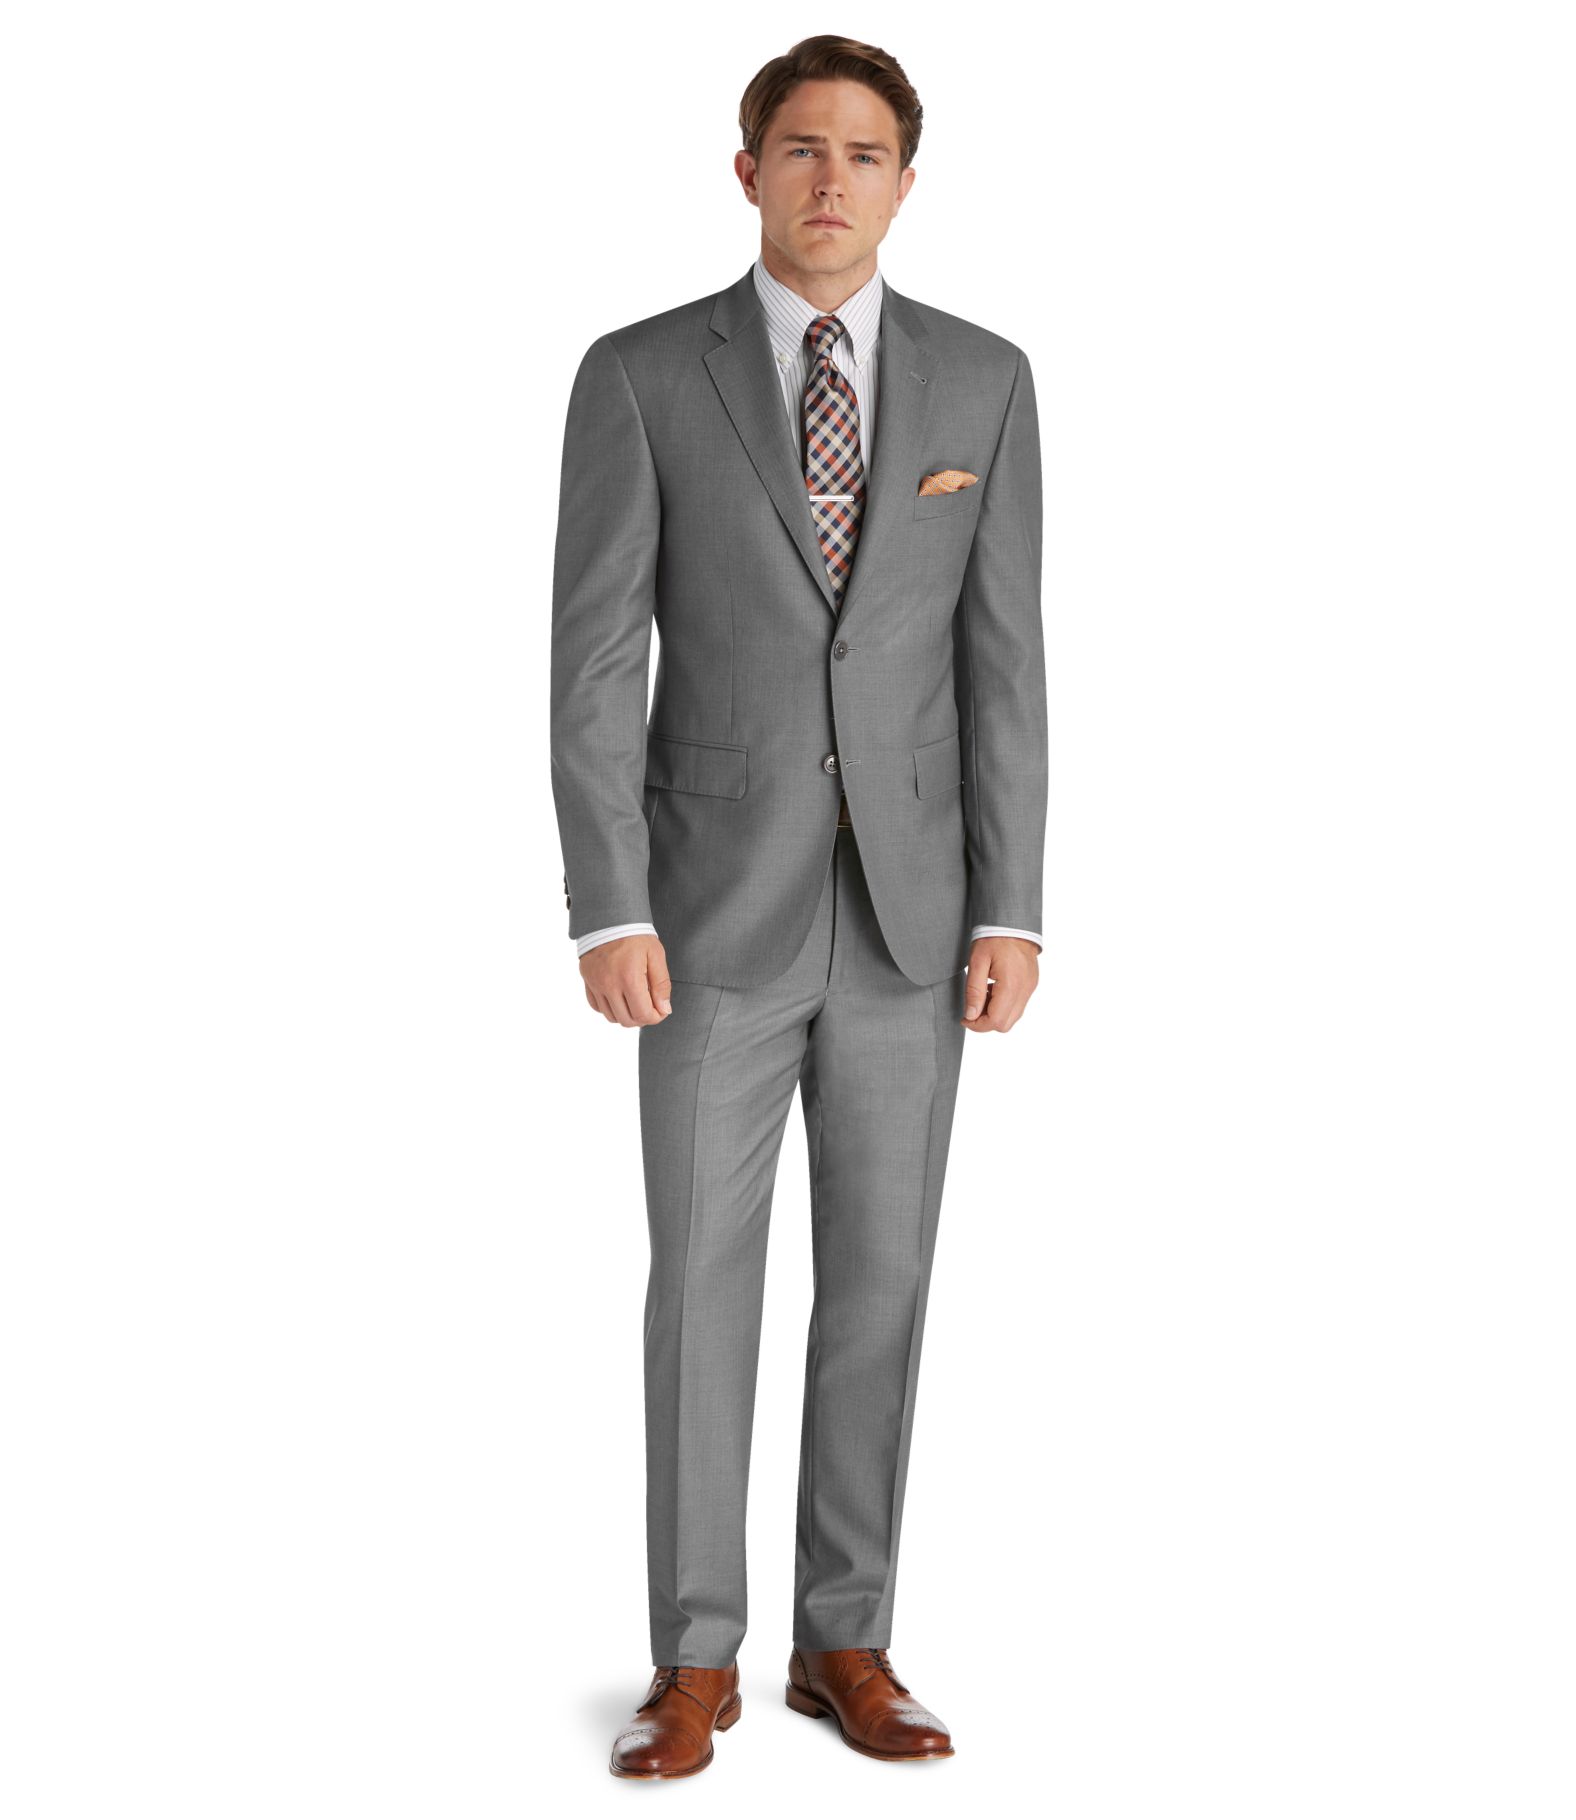 Dark Grey or Medium Grey suit? : malefashionadvice